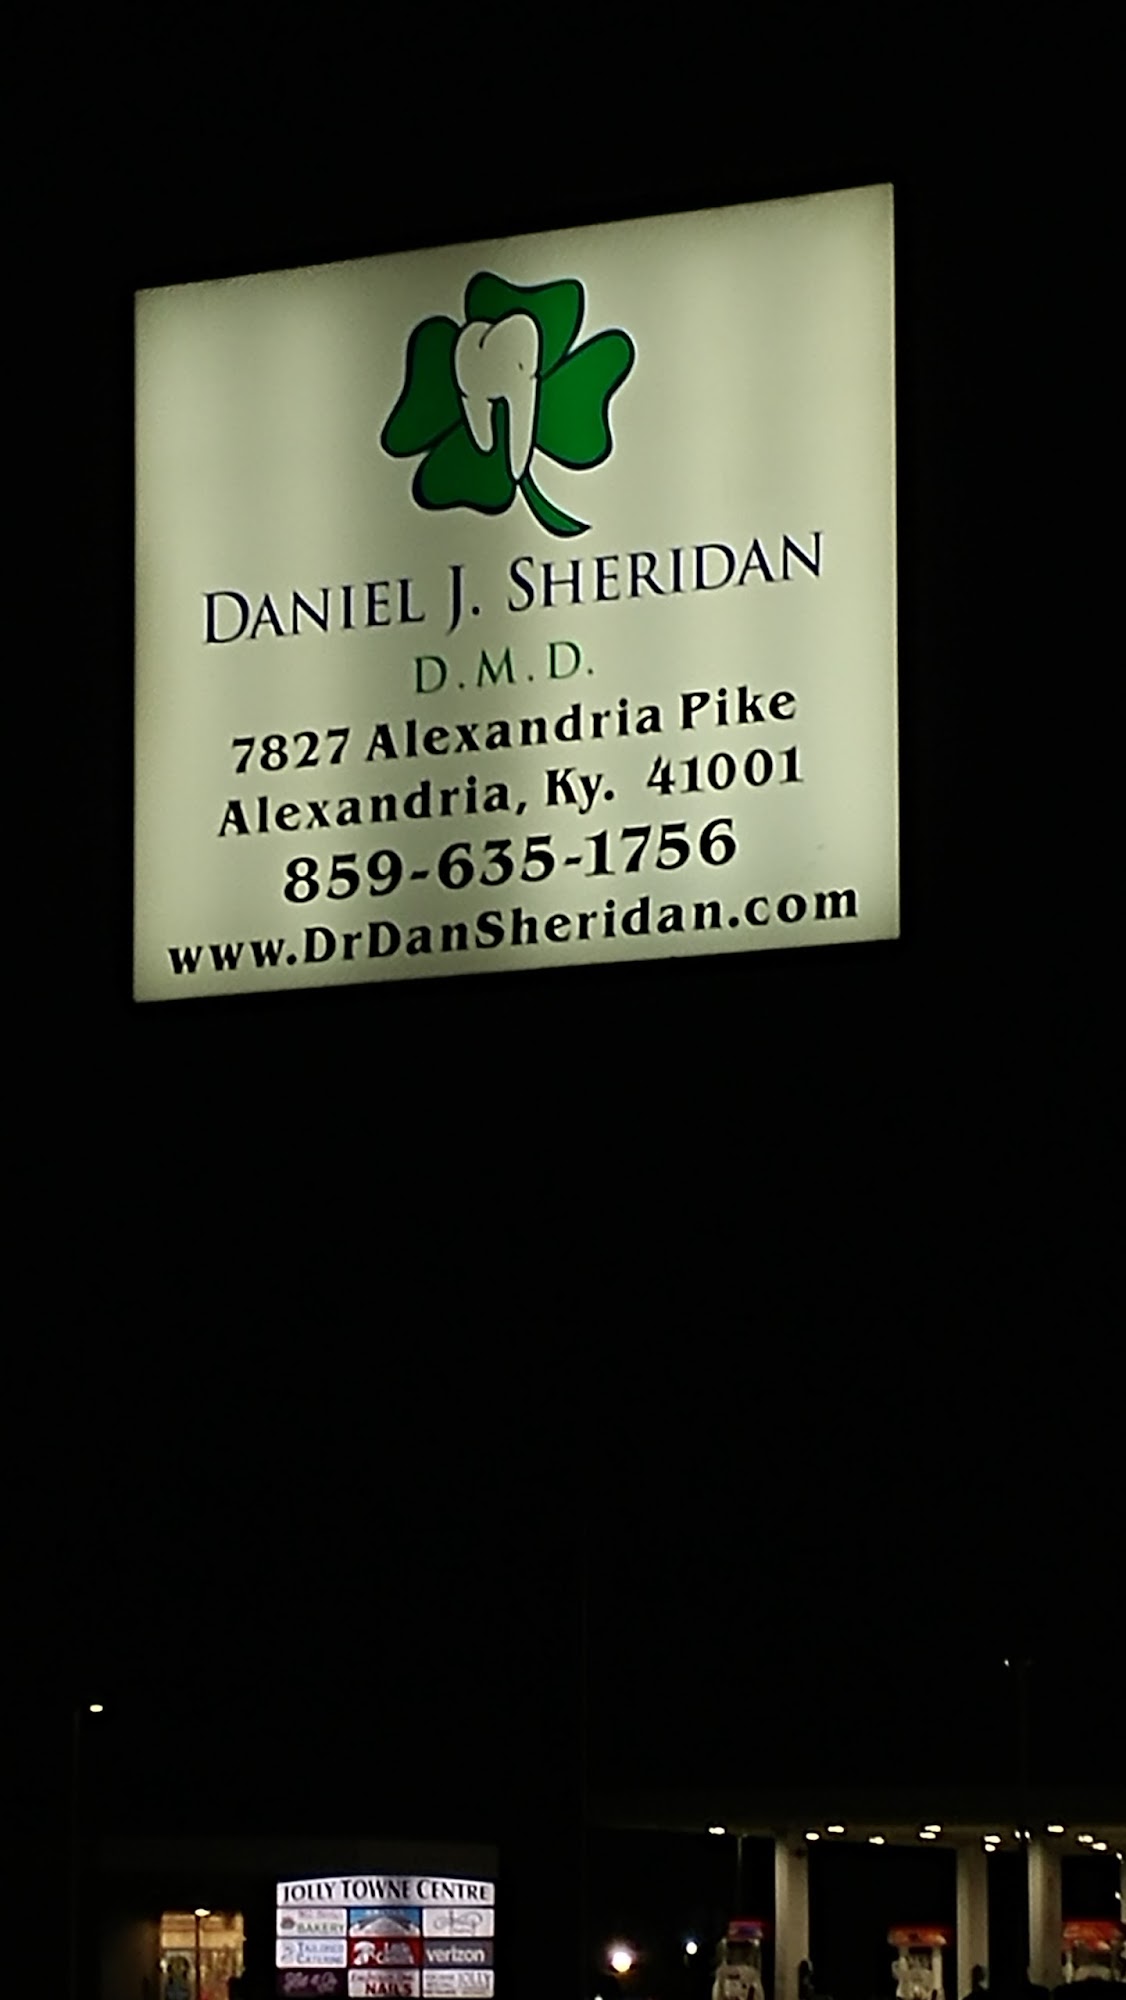 Daniel J Sheridan D.M.D. 7827 Alexandria Pike, Alexandria Kentucky 41001